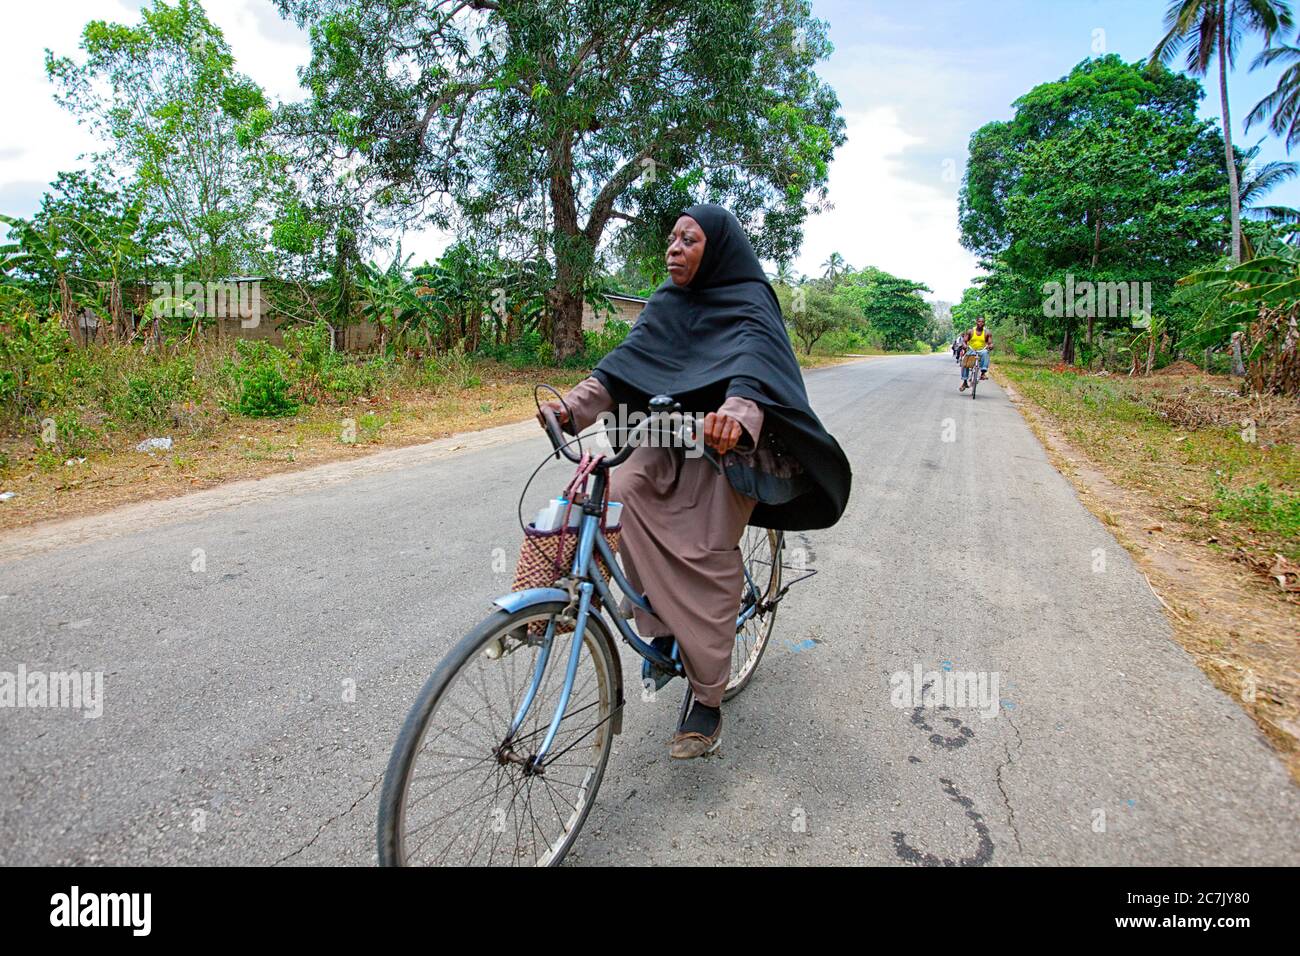 Students returning to their homes bike after finishing school, Zanzibar, Tanzania Stock Photo